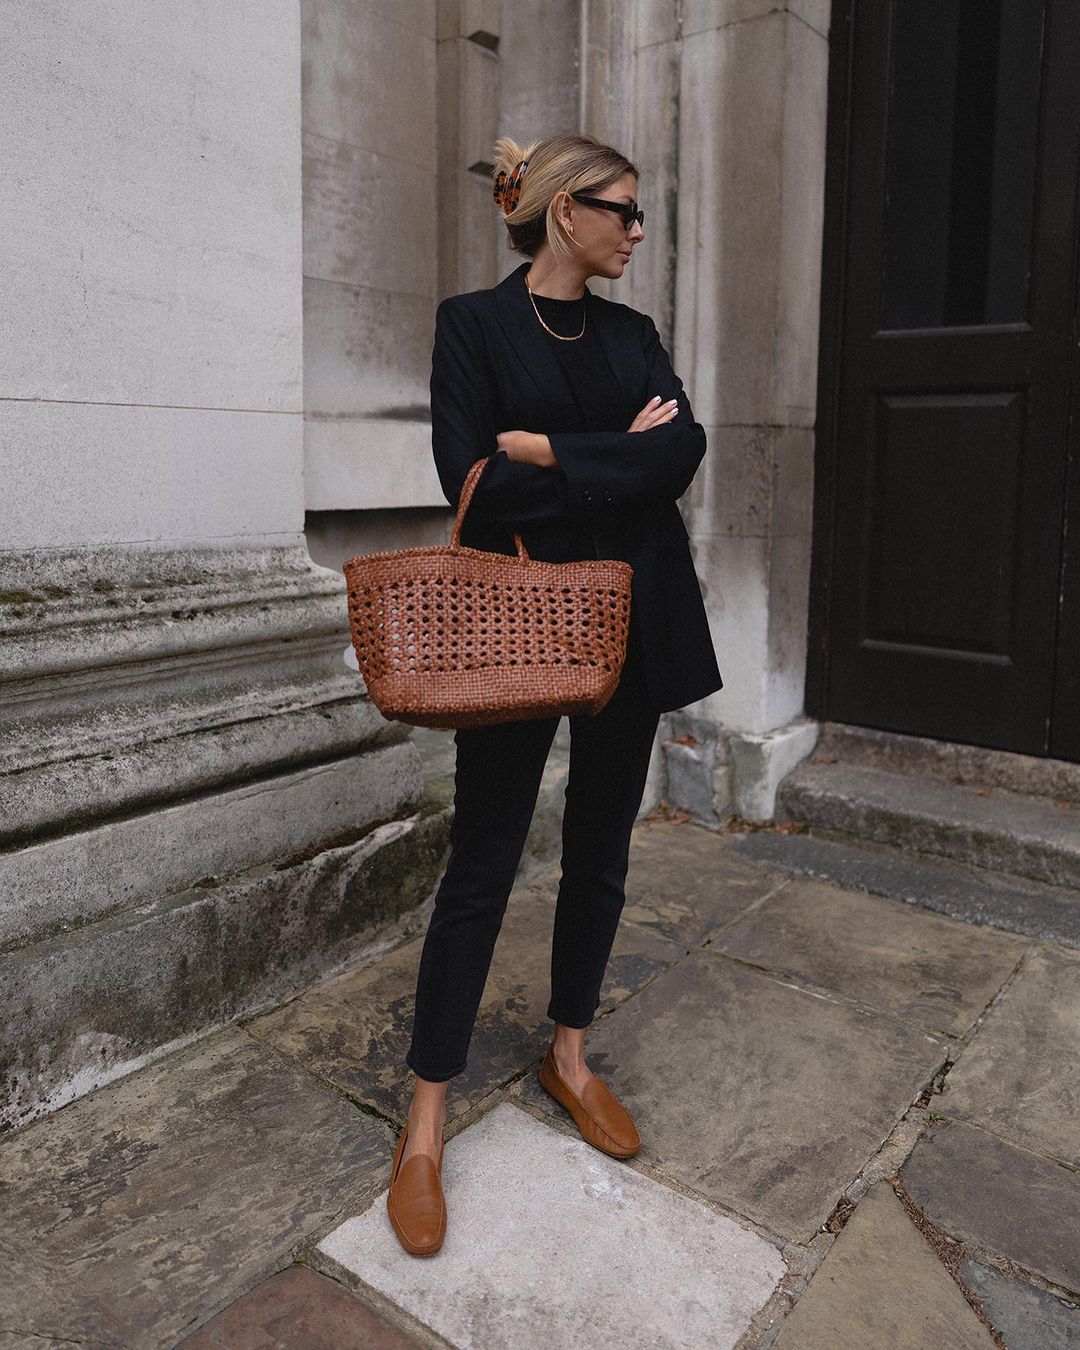 Blogger Style Inspiration No.16: Emma Hill, London, England